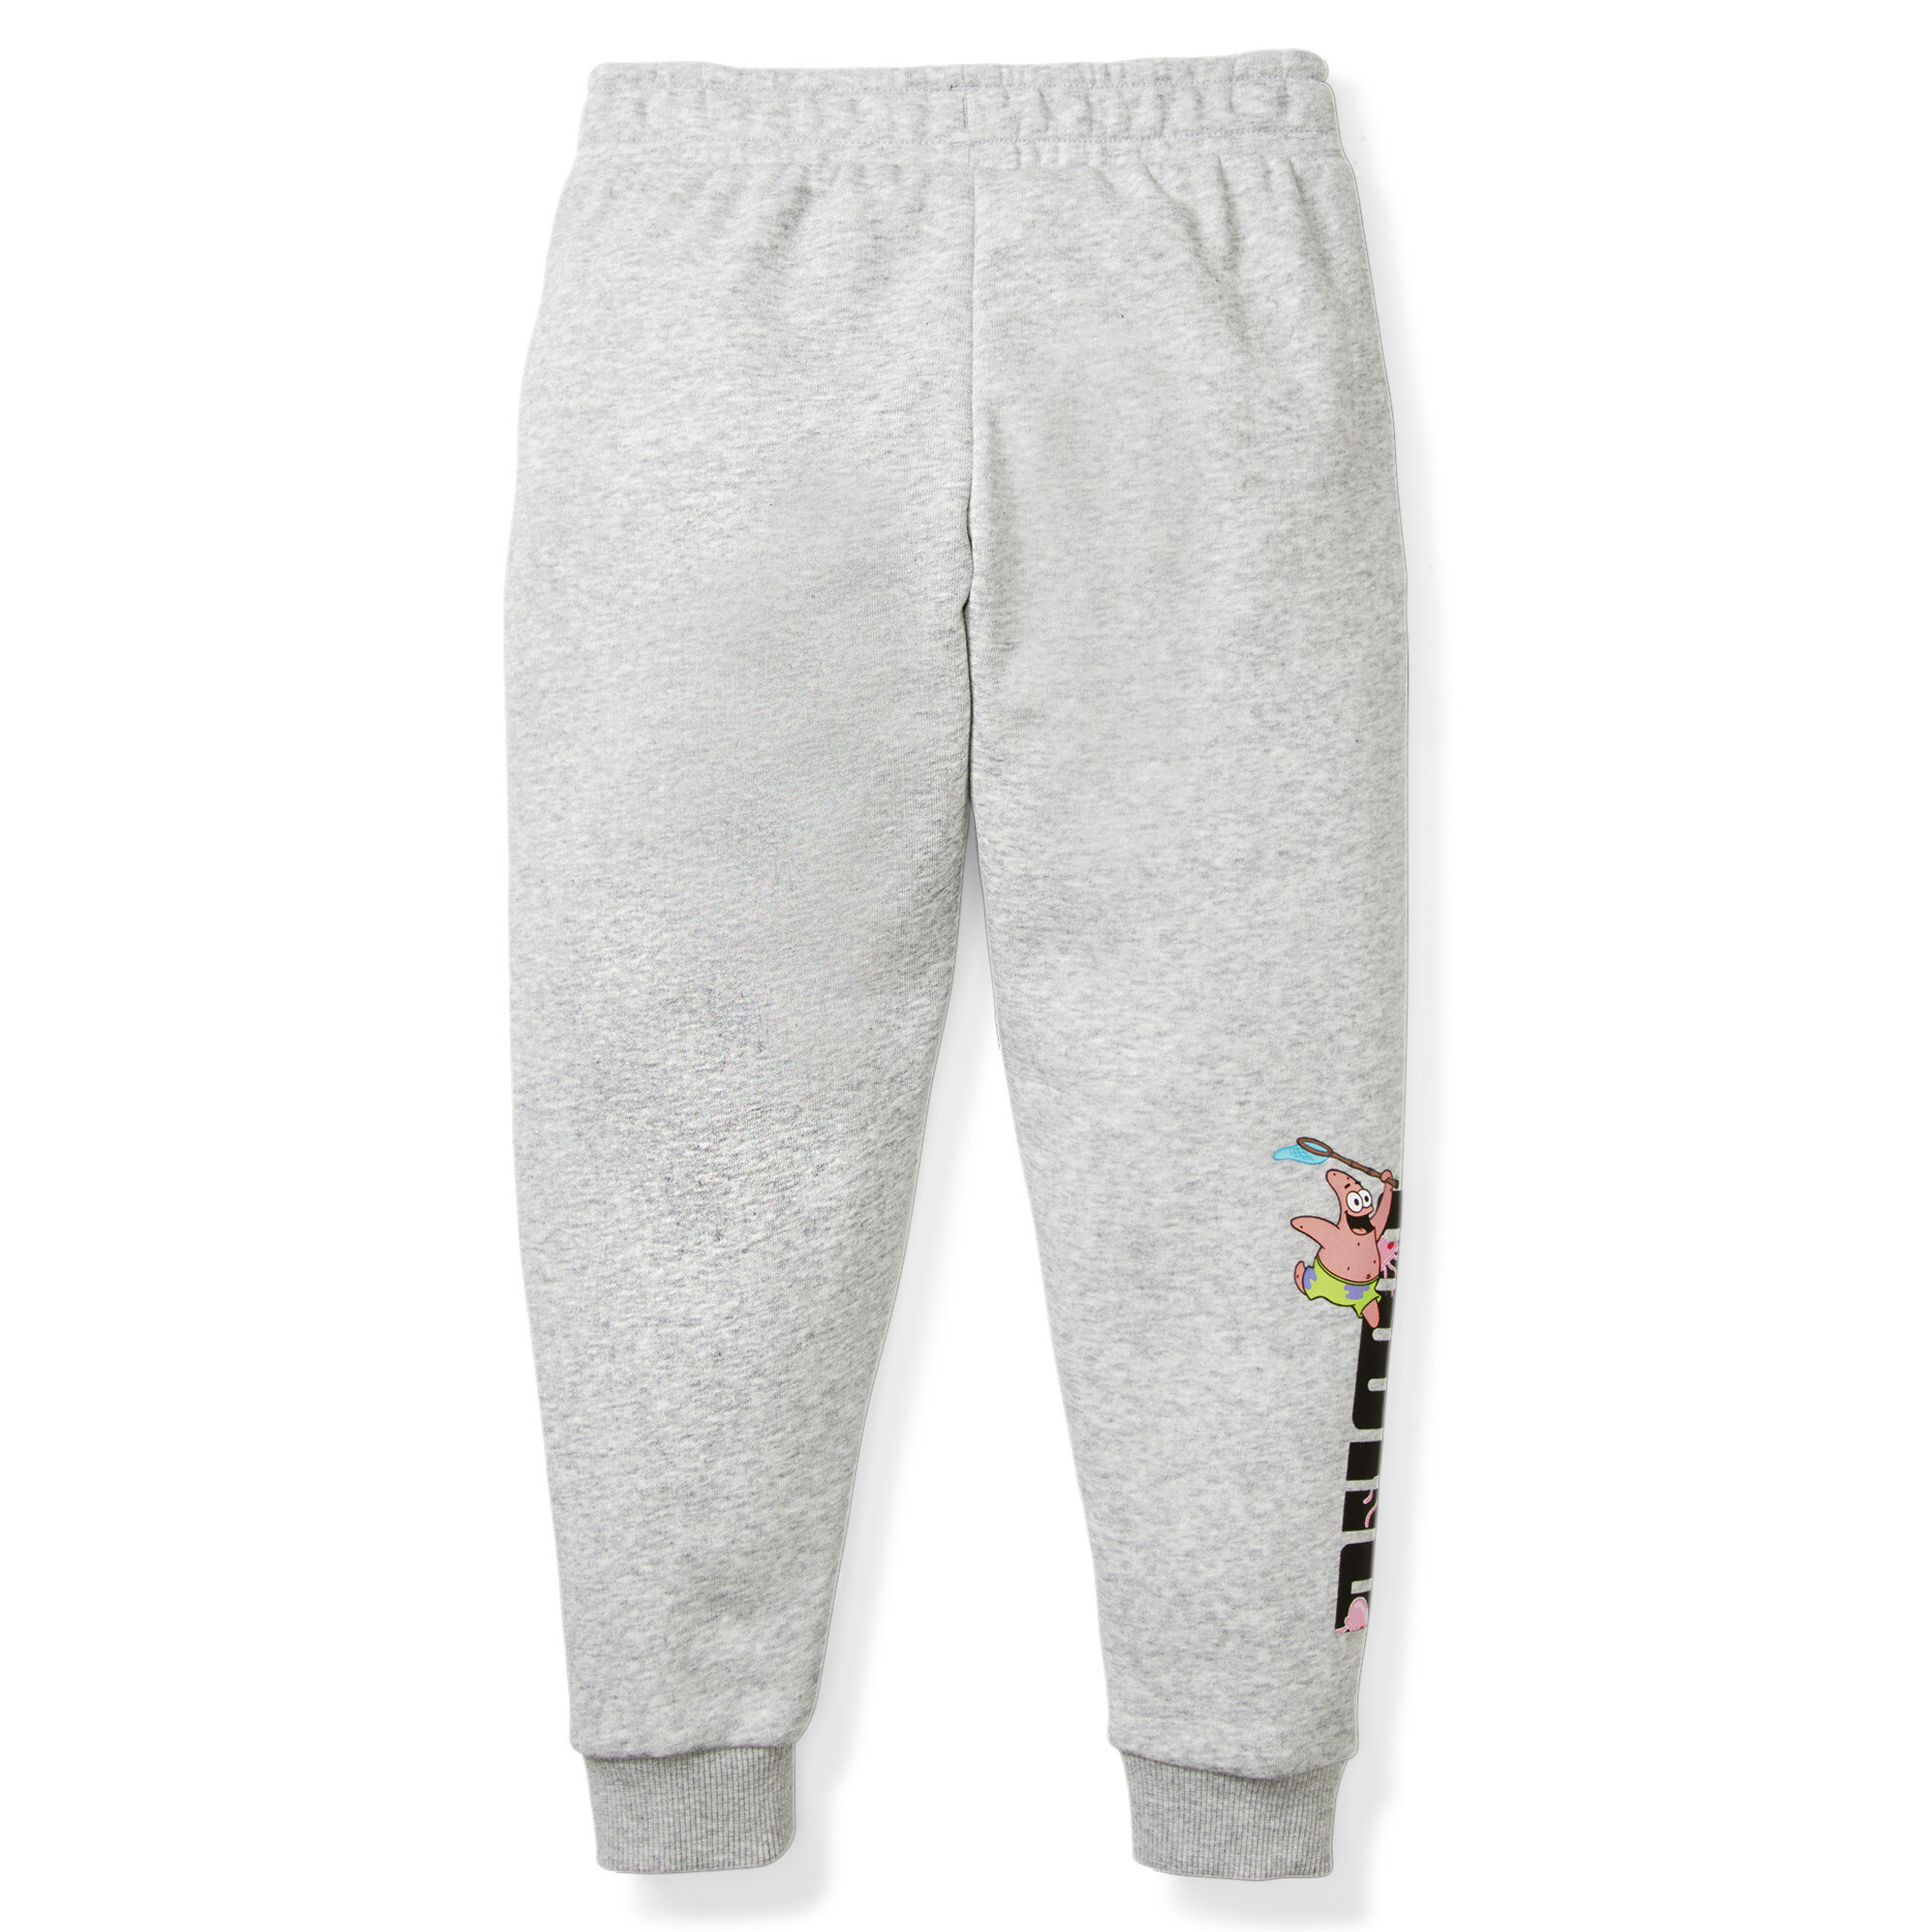 Puma X SPONGEBOB Sweatpants Kids, Gray, Size 1-2Y, Clothing